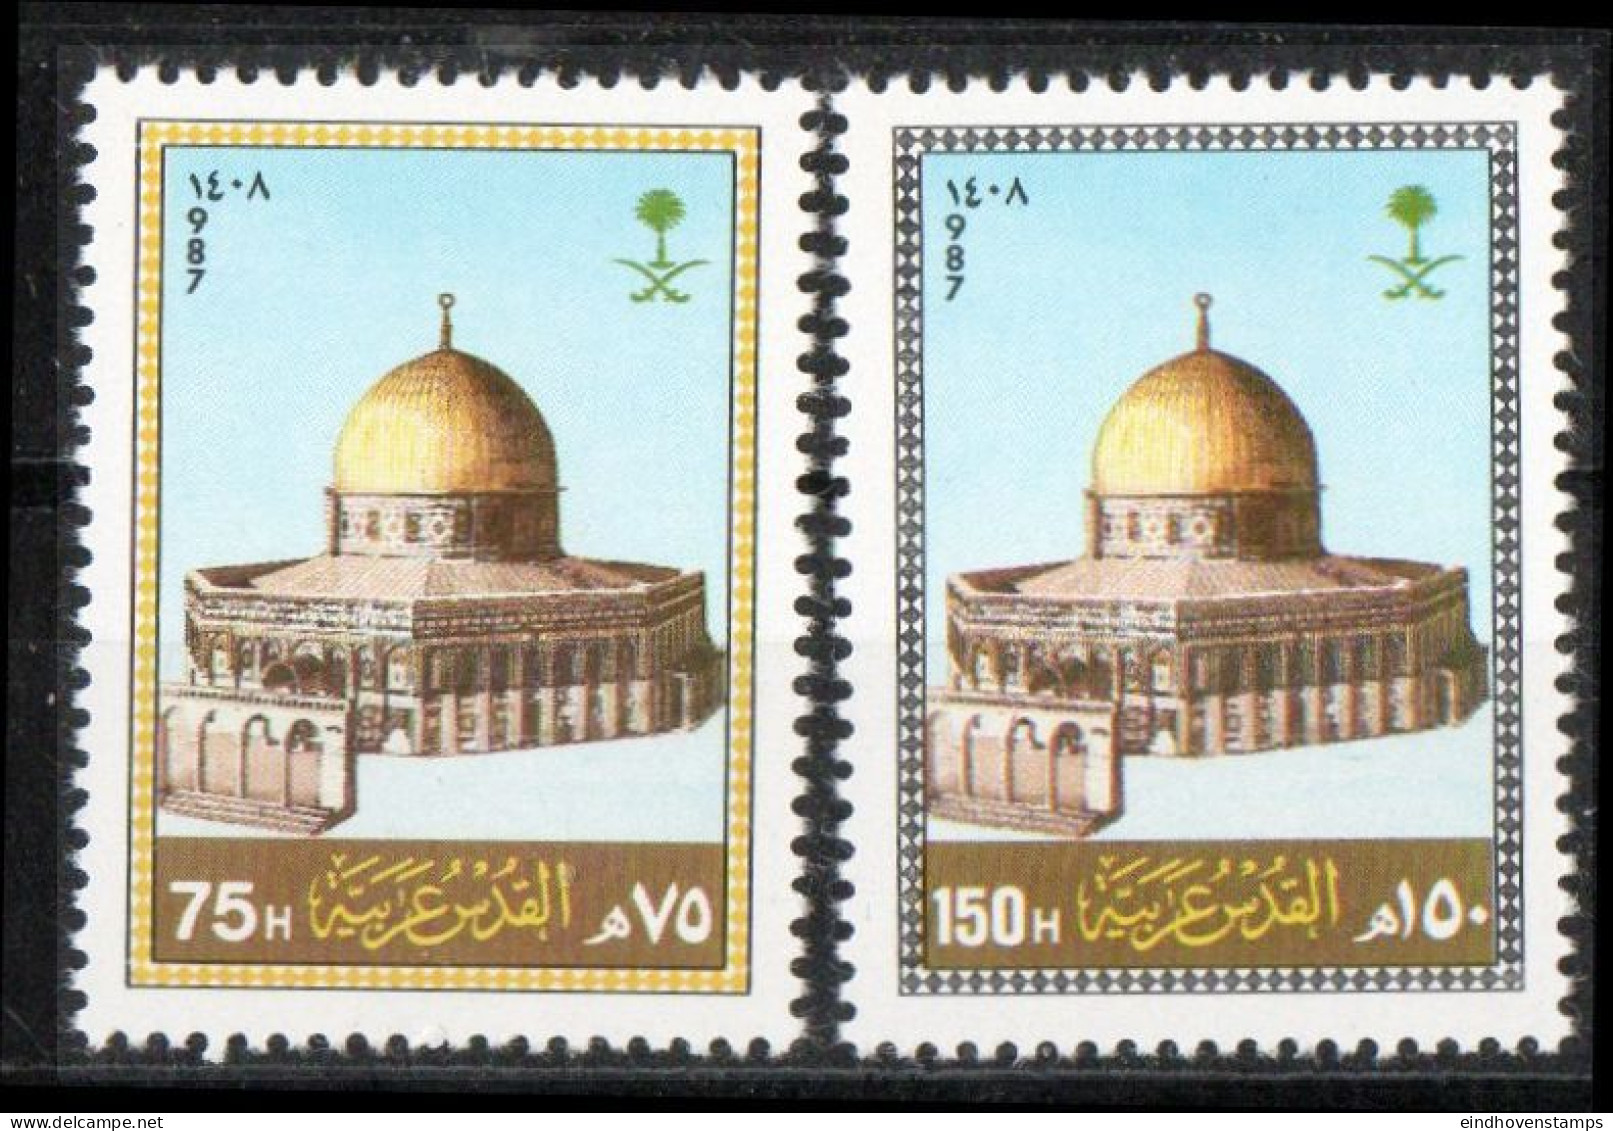 Saudi Arabia 1987 Dome Of The Rock, Al Aqsa Mosqee 2 Values MNH SA-87-15 - Mezquitas Y Sinagogas